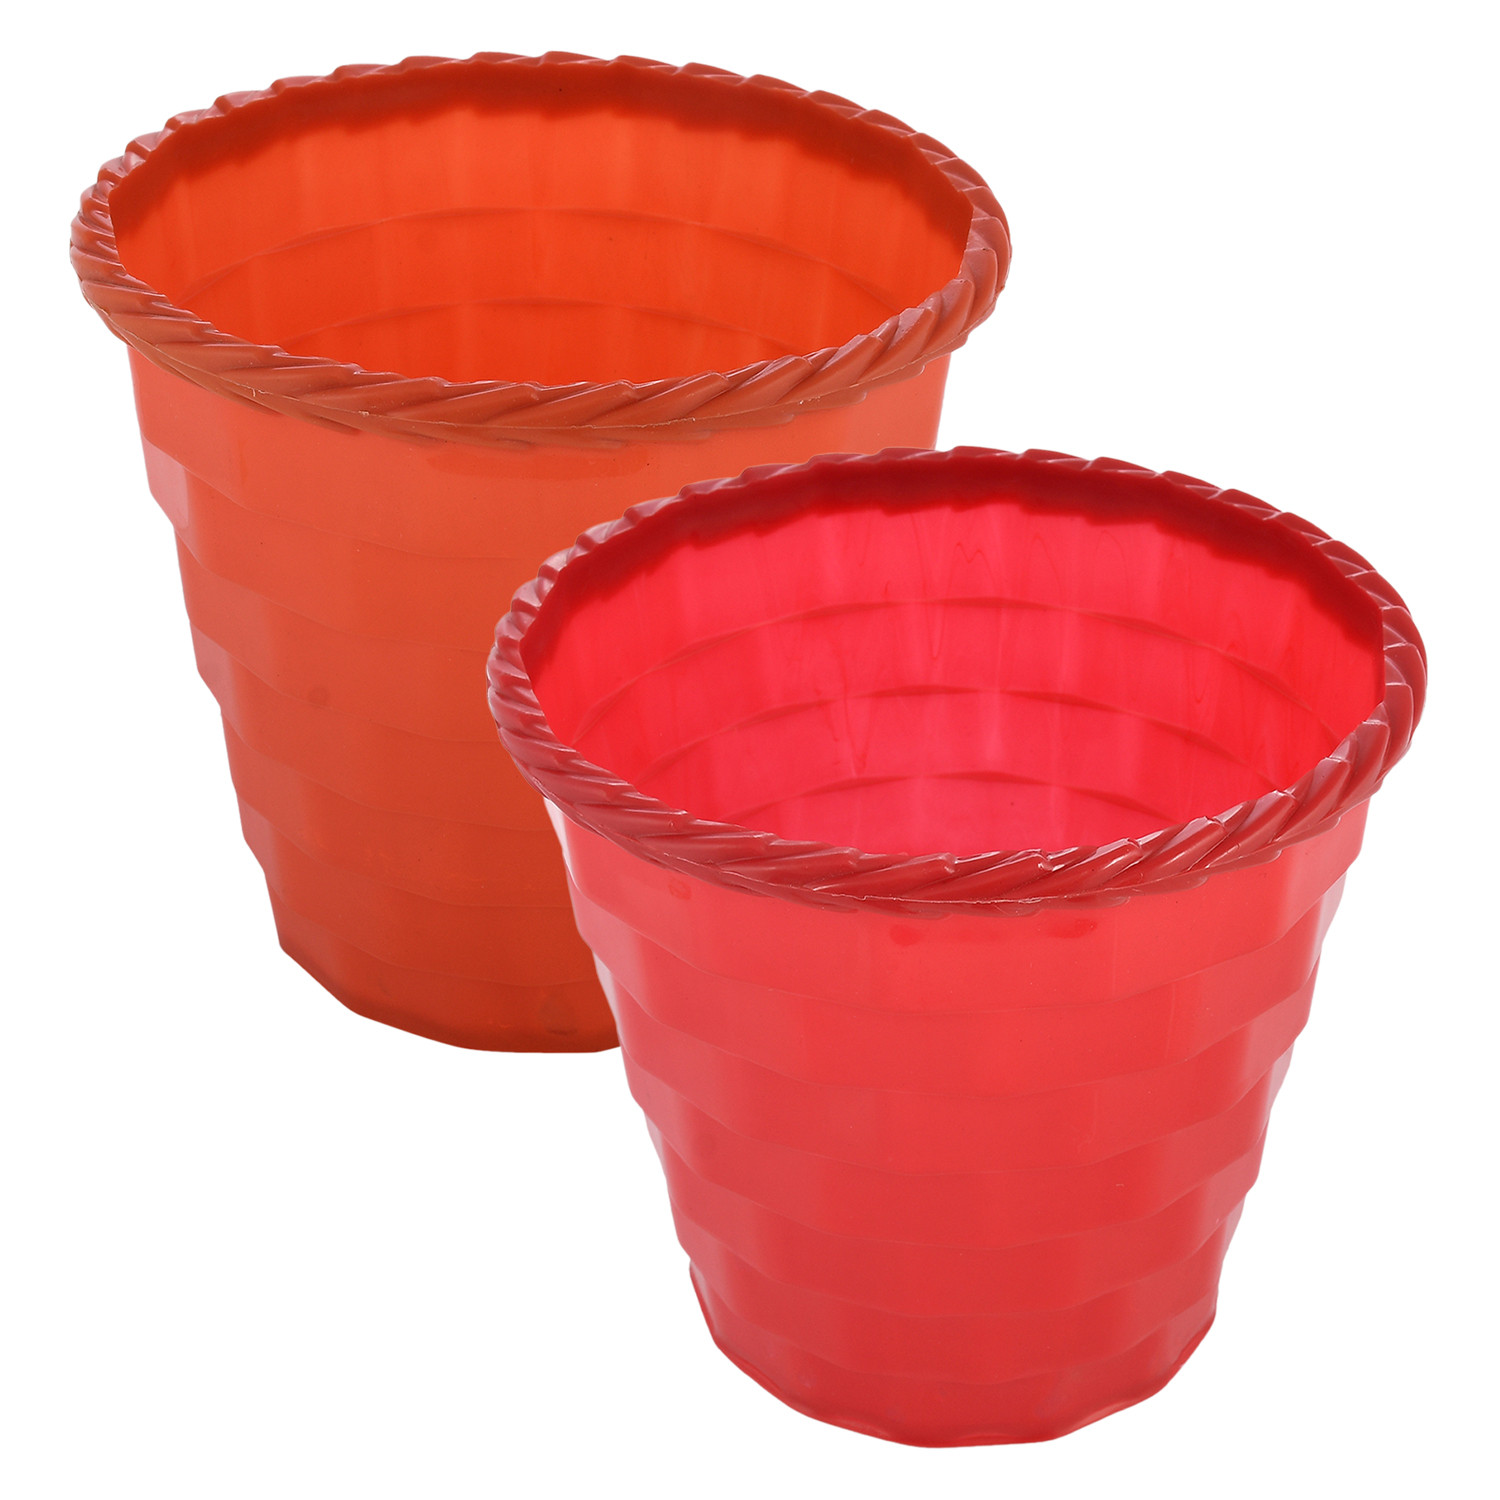 Kuber Industries Brick Flower Pot|Durable Plastic Flower Pots|Planters for Home Décor|Garden|Living Room|Balcony|6 Inch|Pack of 2 (Red & Orange)